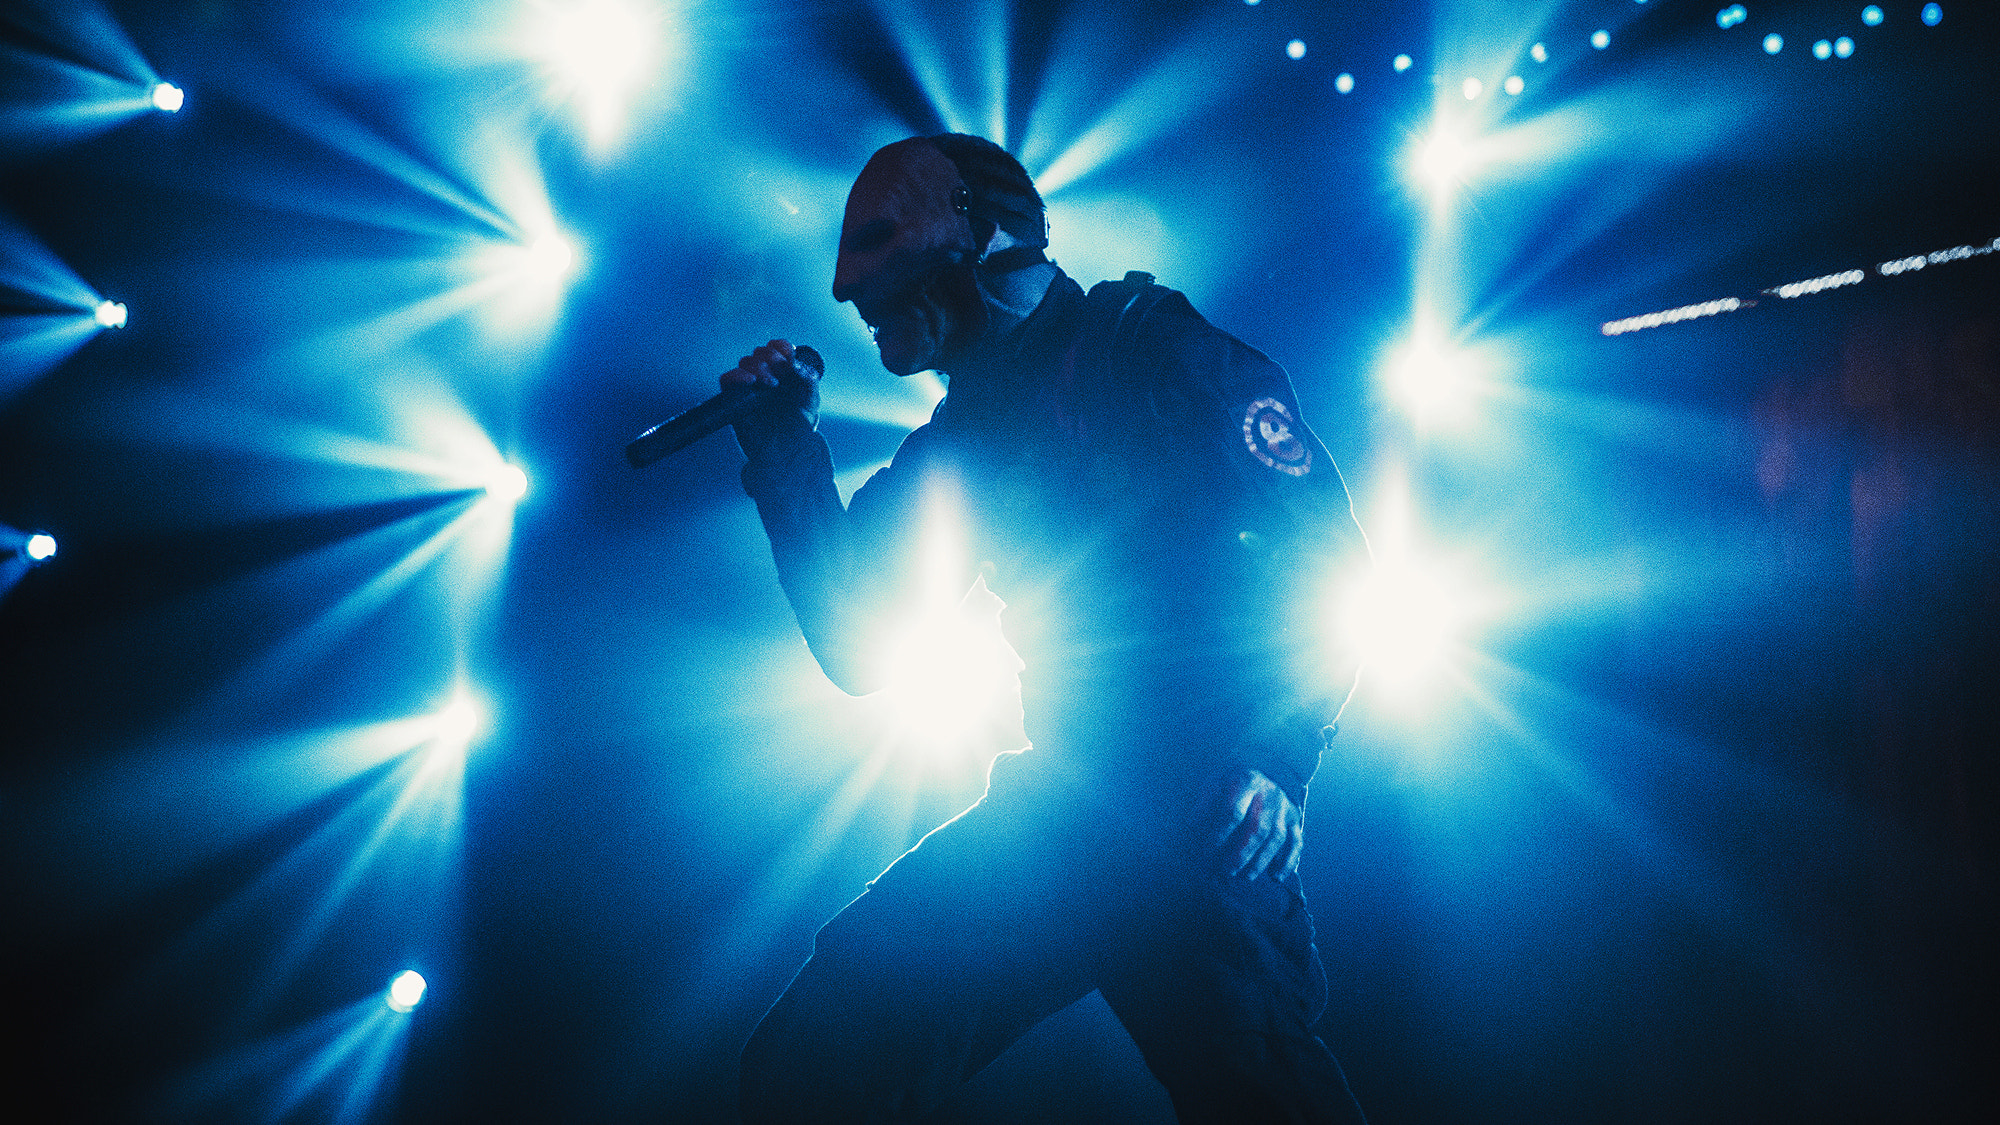 Concerts Musician Singer Silhouette Slipknot Corey Taylor Stage Light 2000x1125